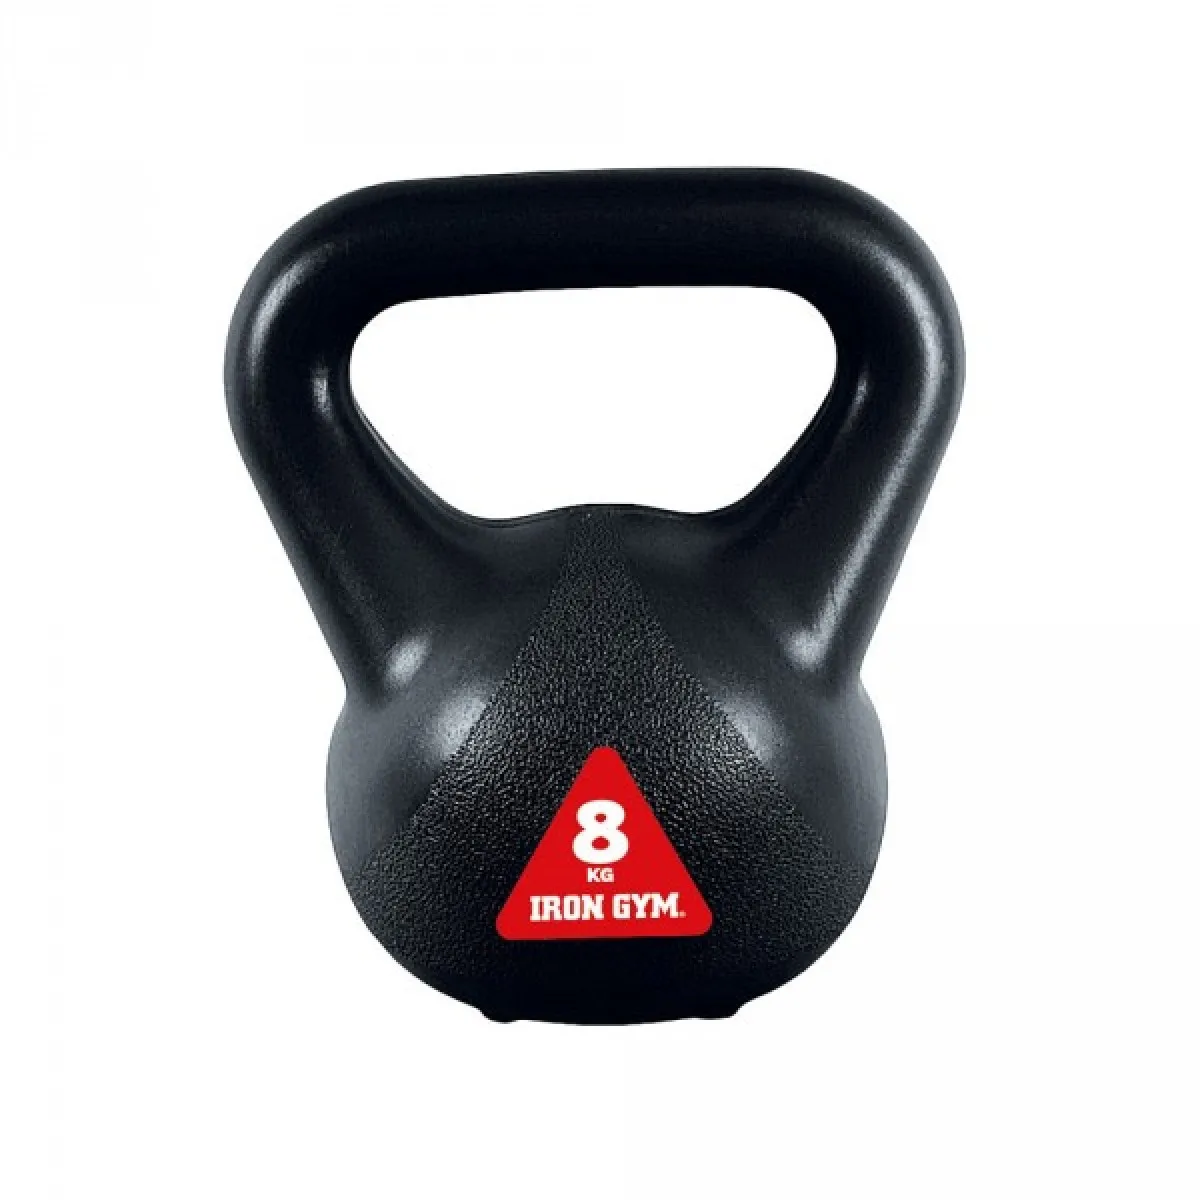 Kettlebell Iron Gym 8 kg